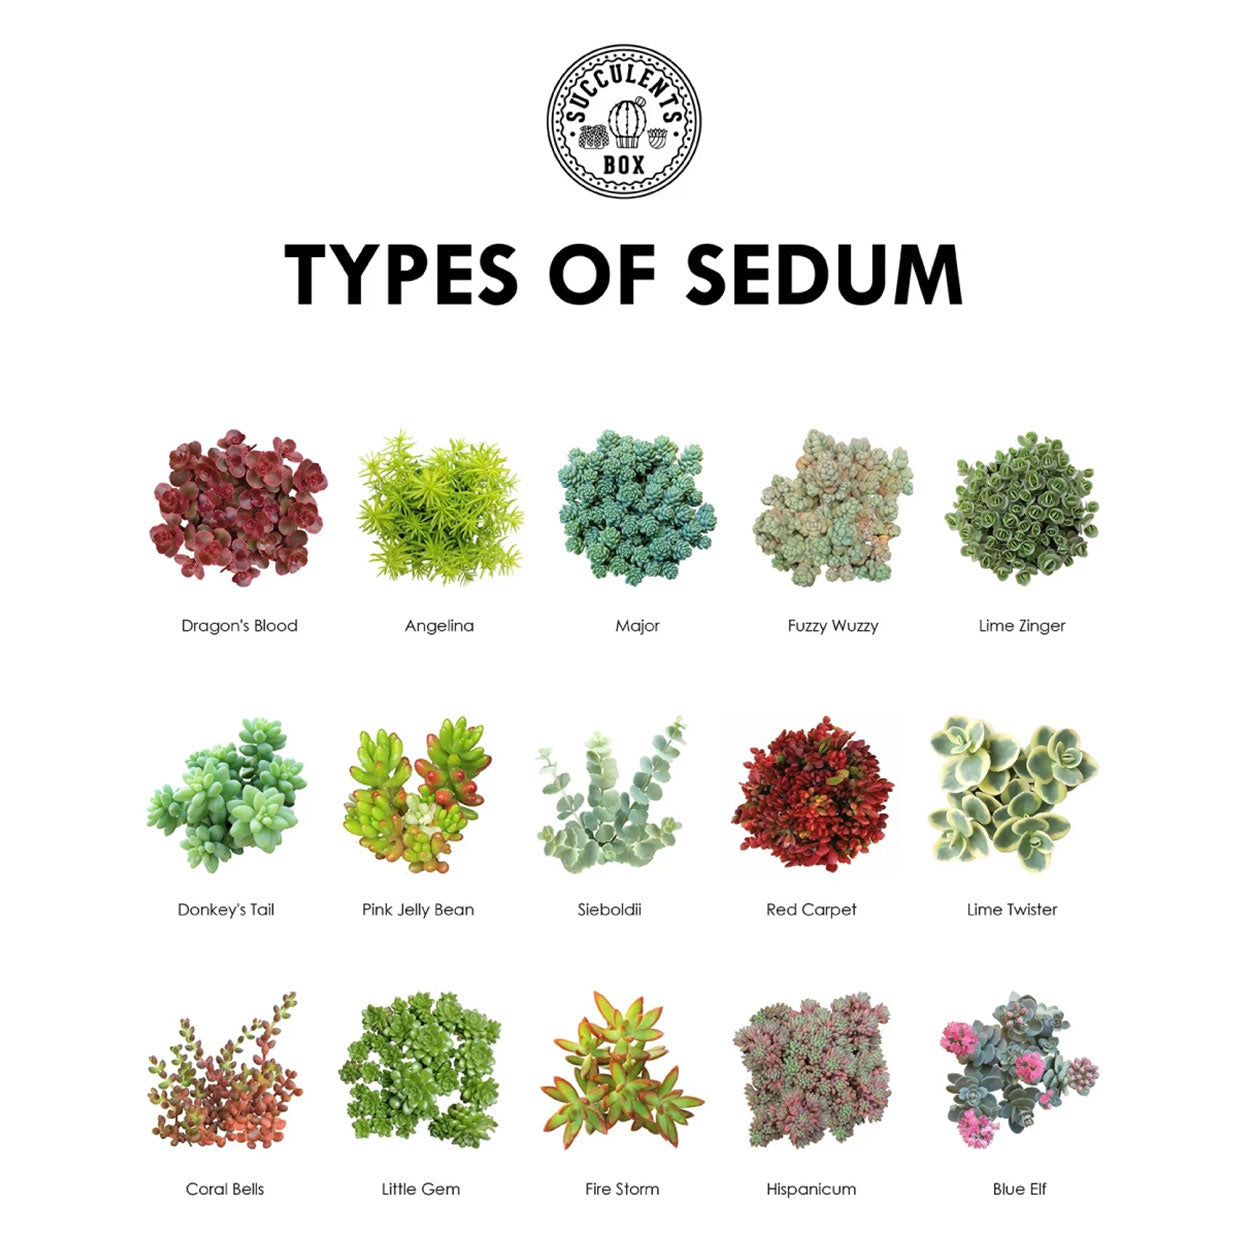 sedum succulent varieties